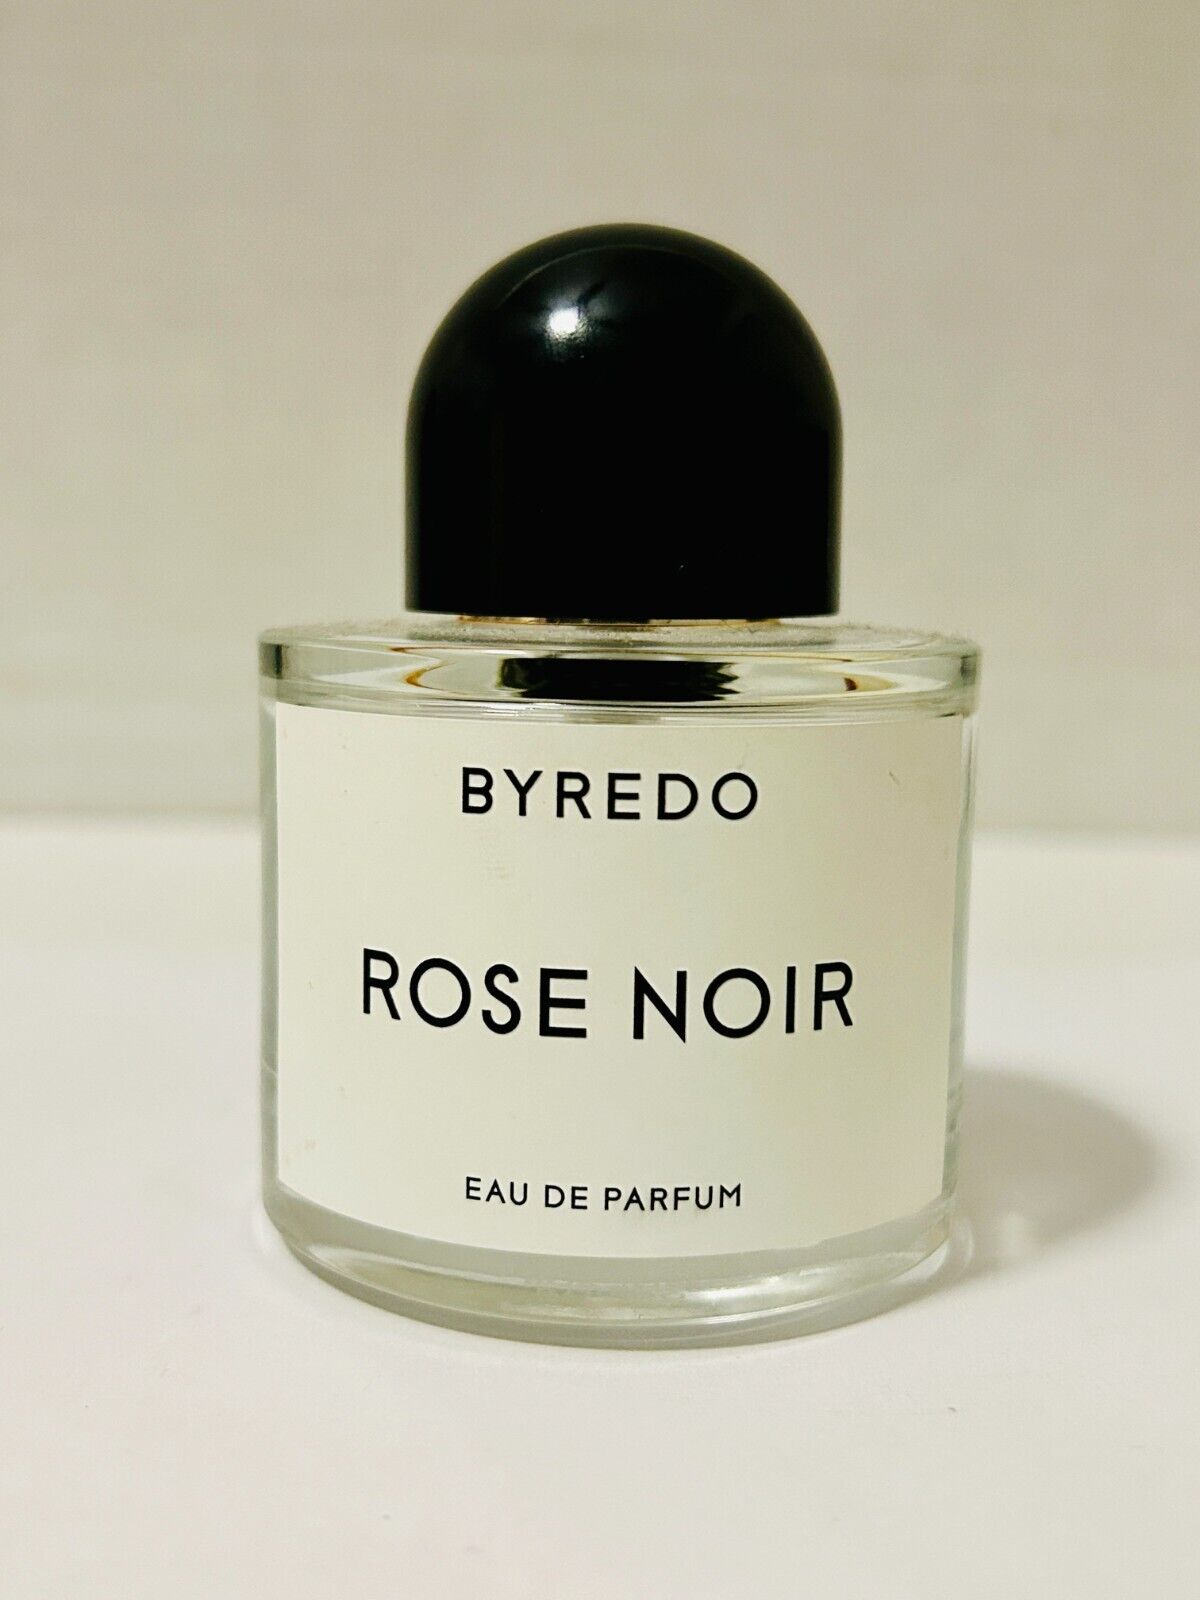 Byredo Rose Noir Eau De Parfum 50ml Emptry Bottle (No Perfume Inside)